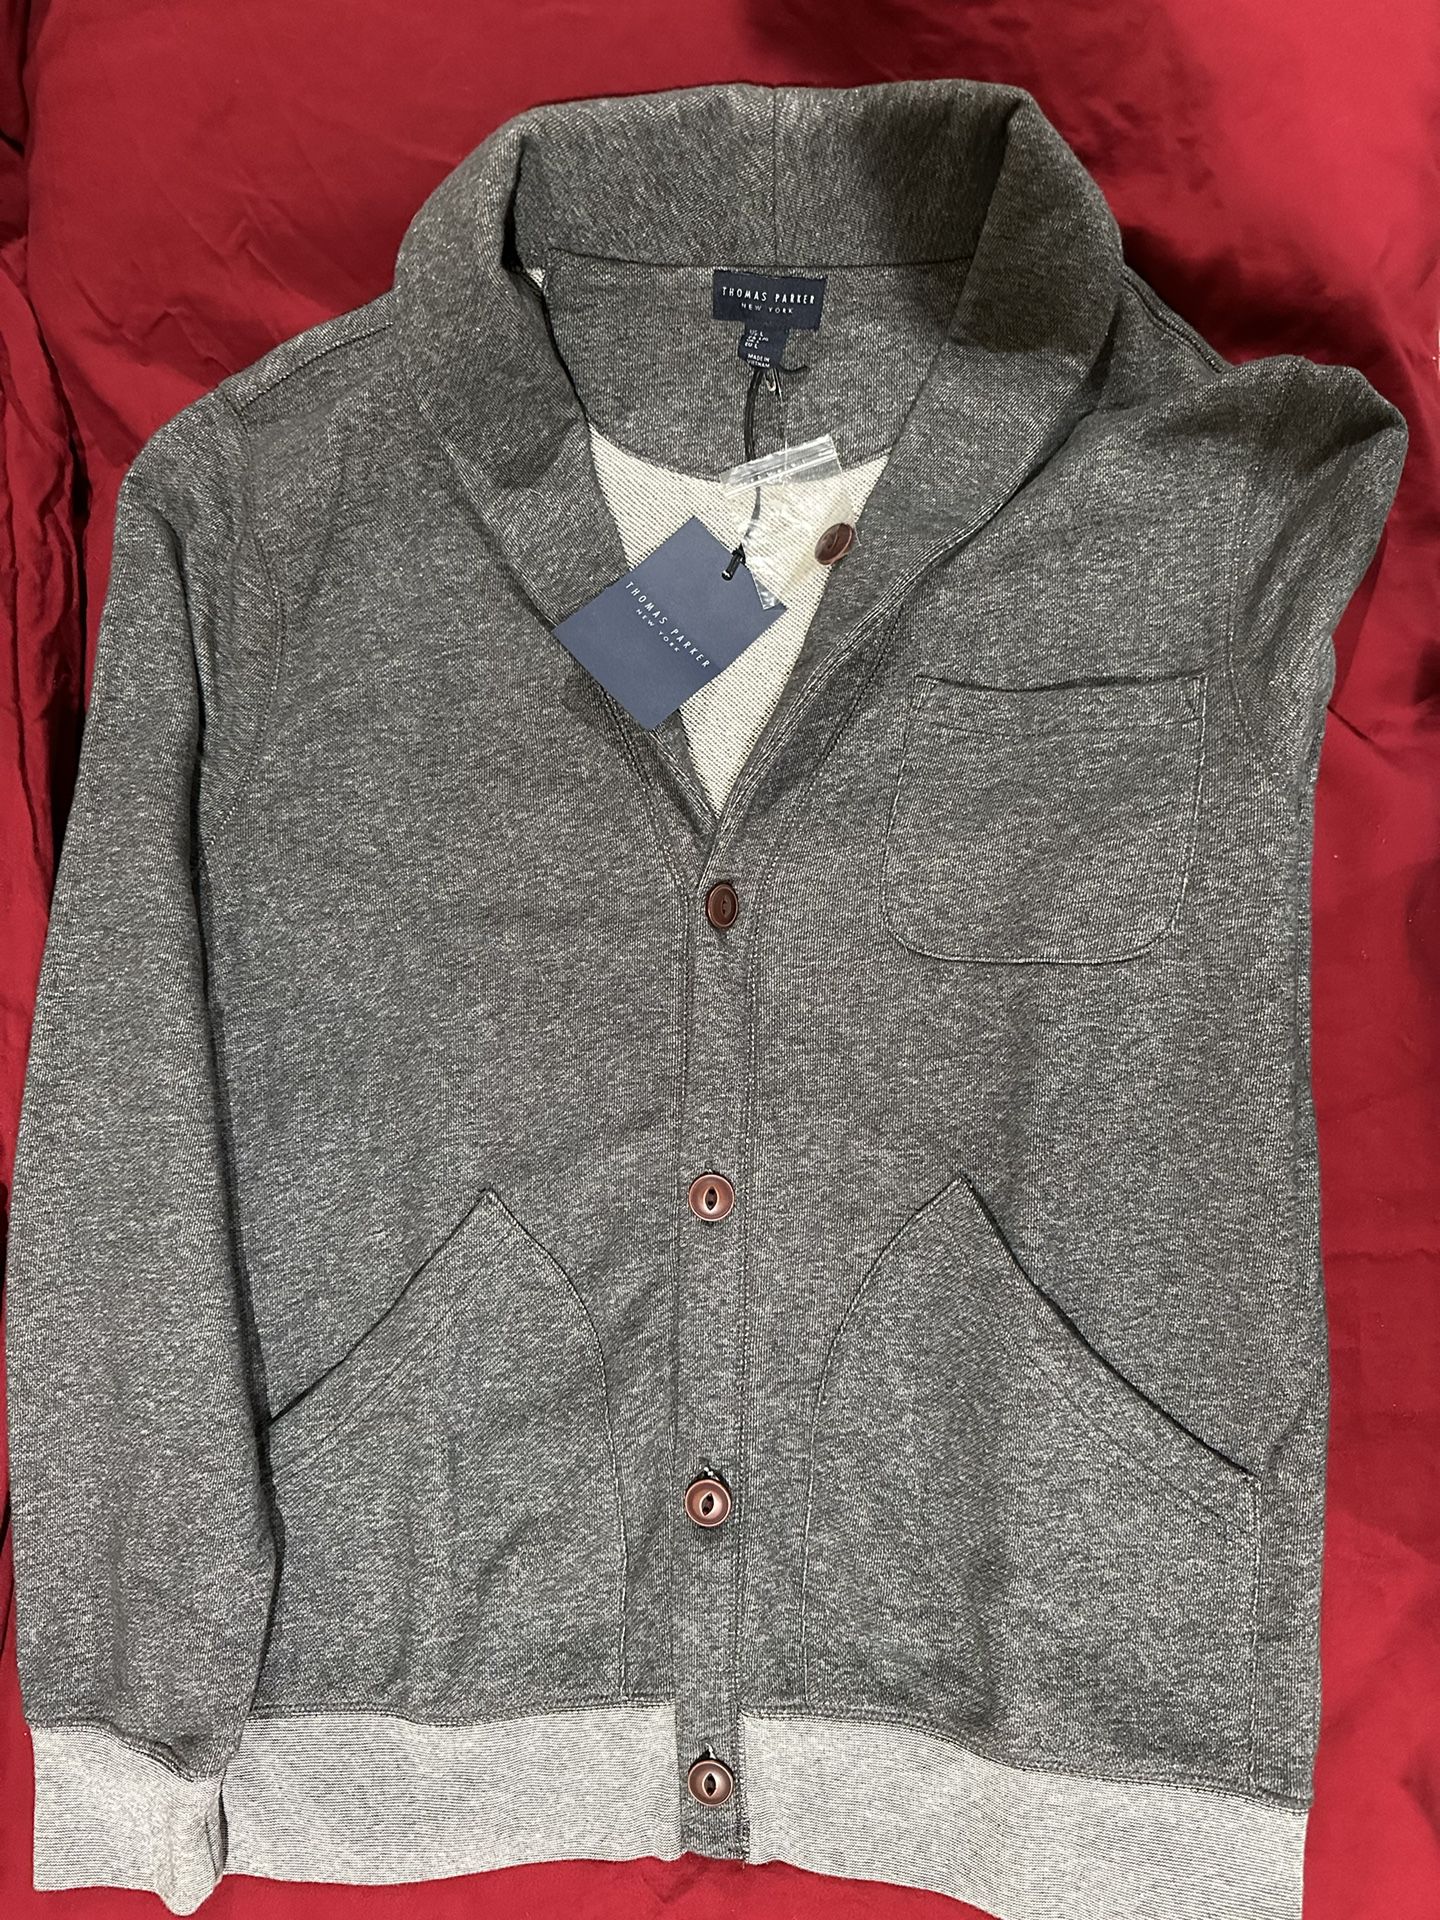 Thomas Parker Cardigan Men Button Up Sweatshirt Pockets Gray Size Large